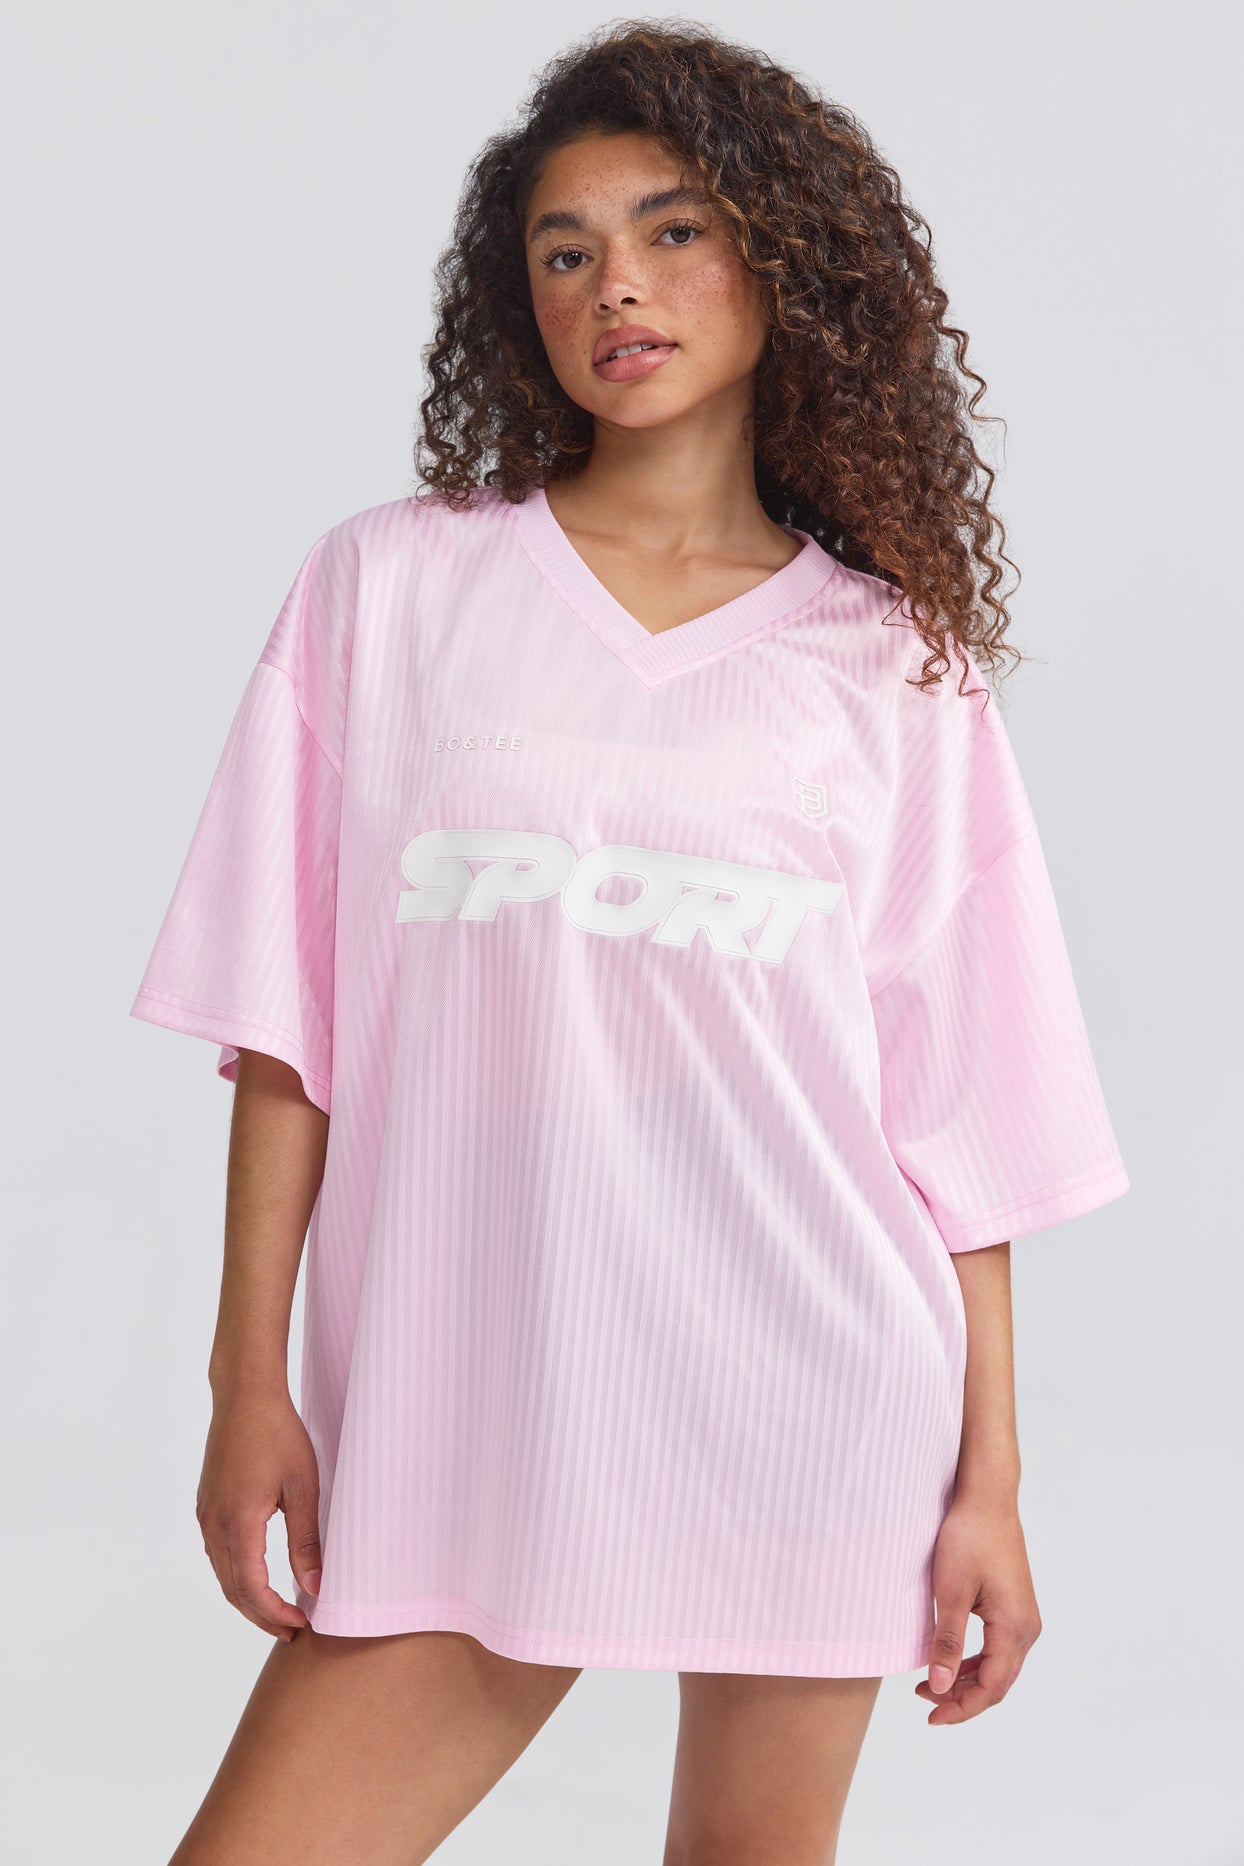 BT1192 Oversize'owa koszulka piłkarska w kolorze Baby Pink